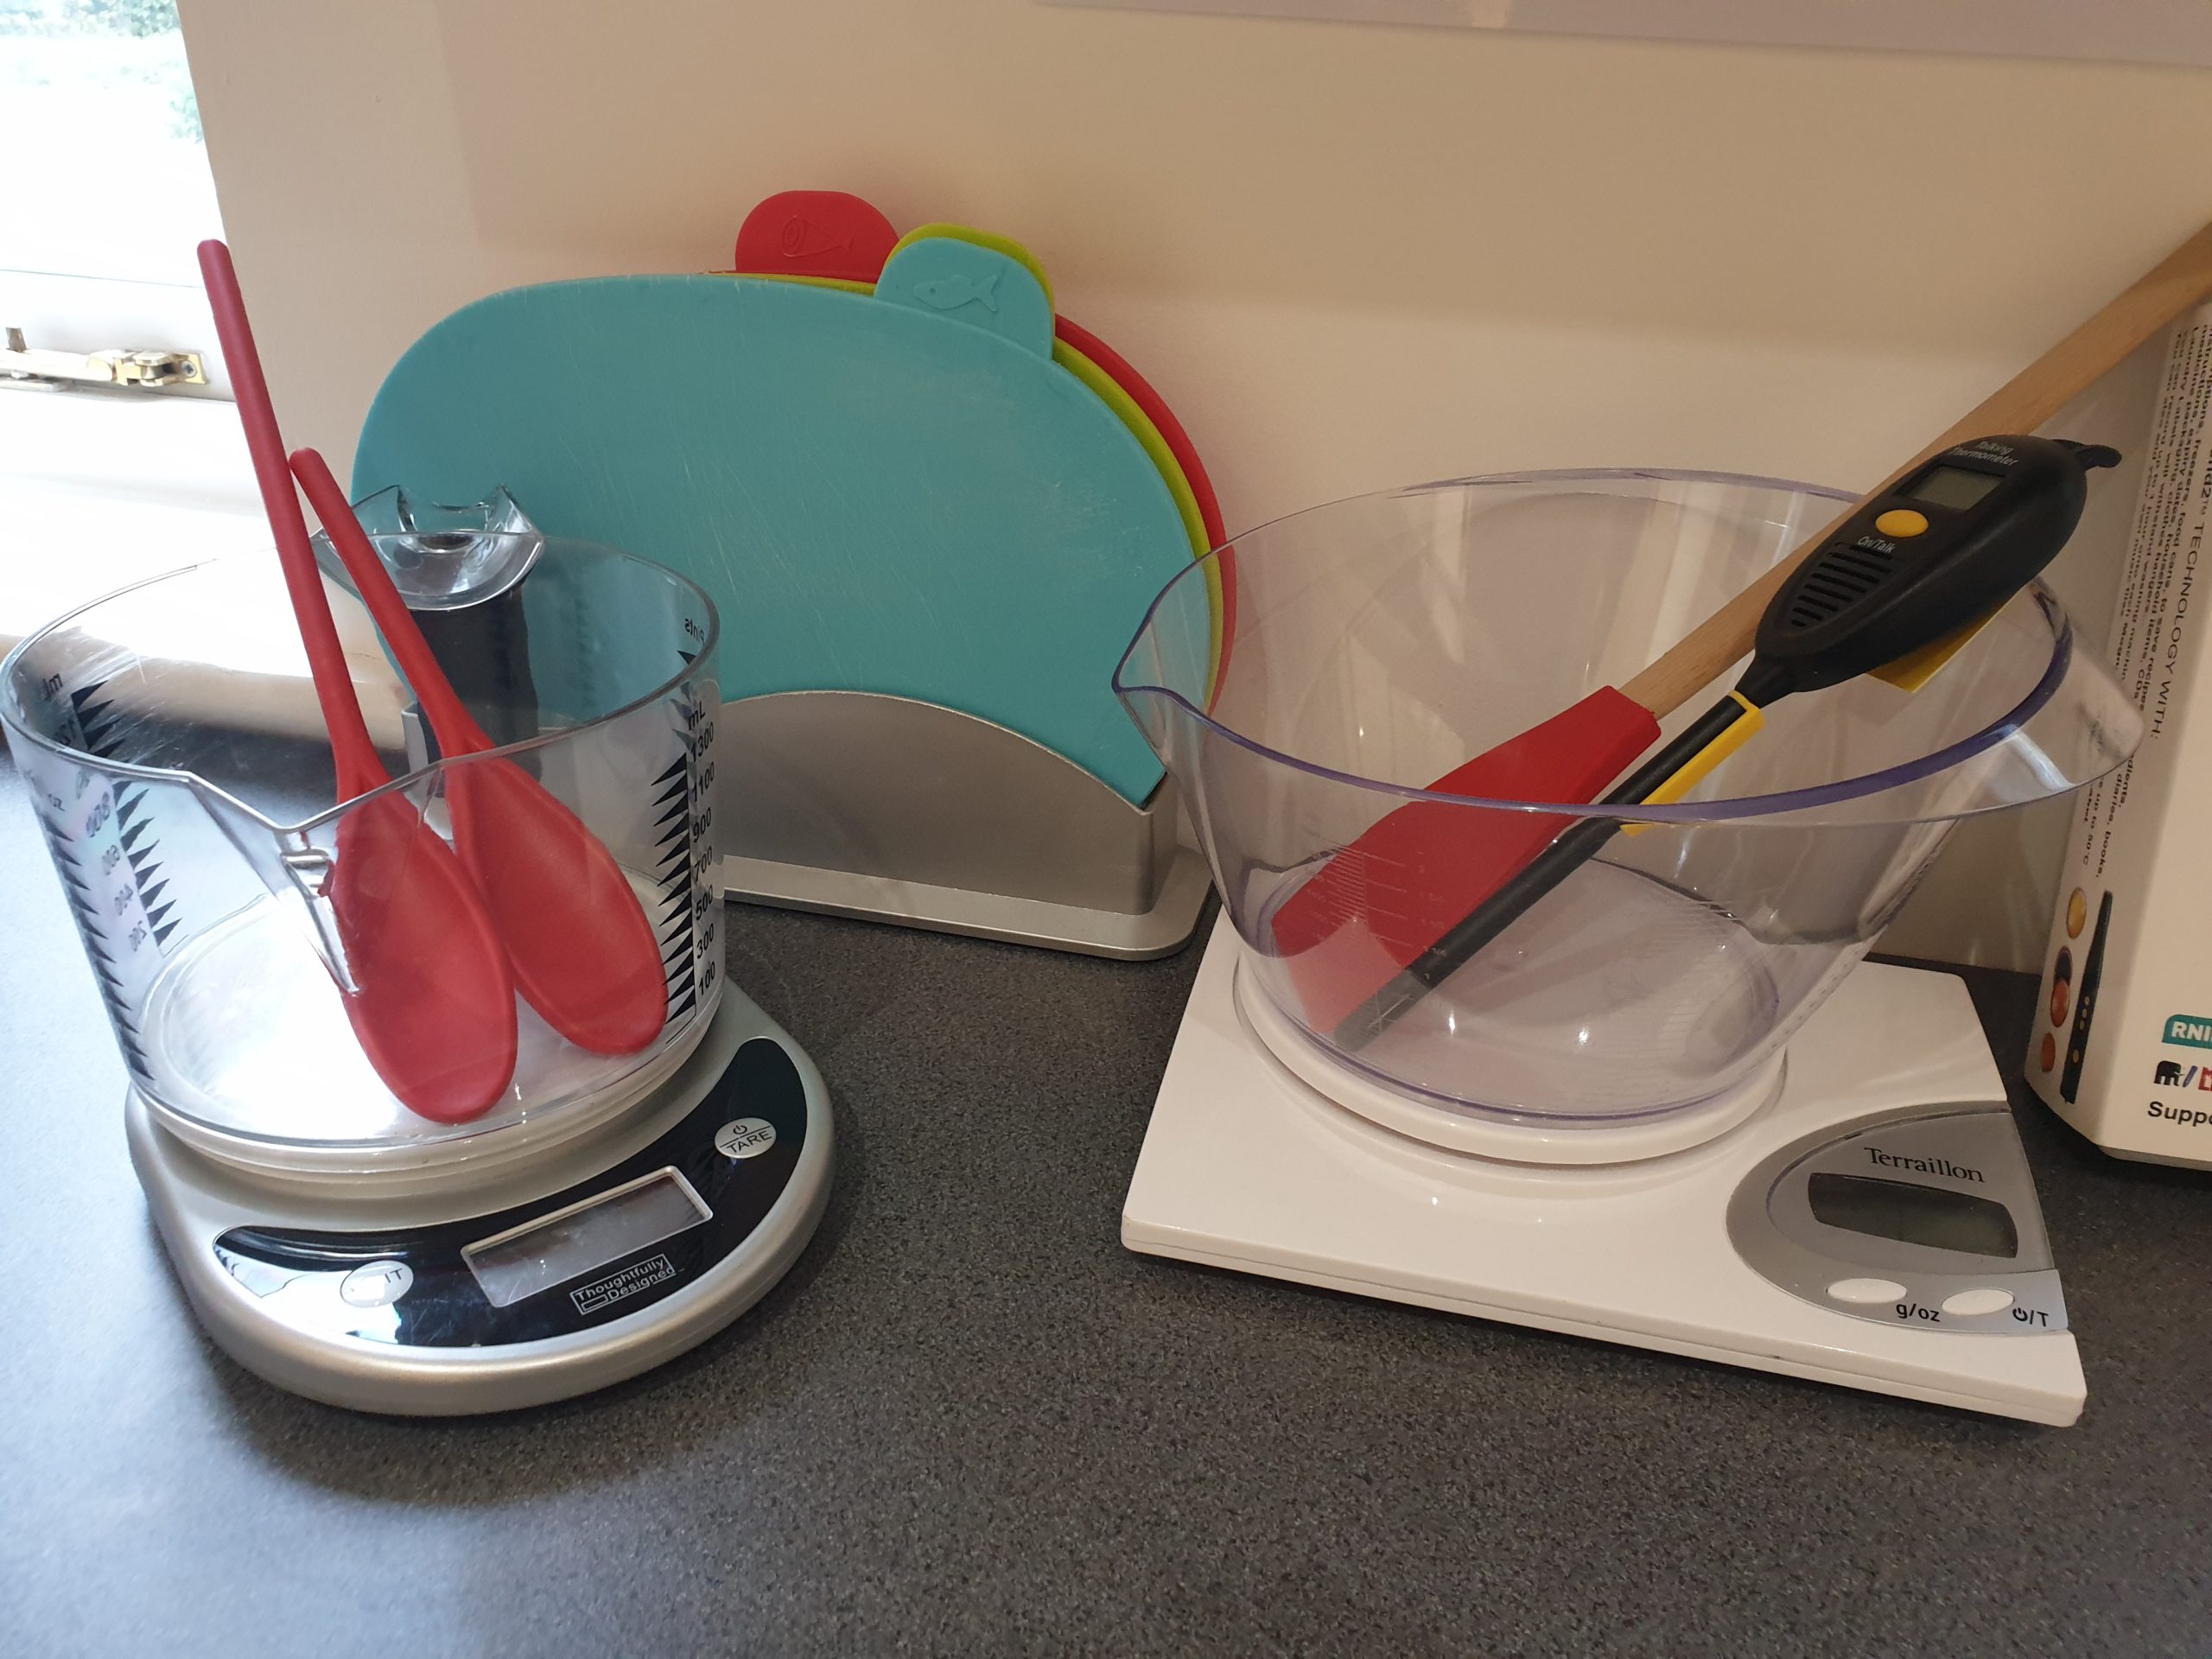 Coloured kitchen utensils